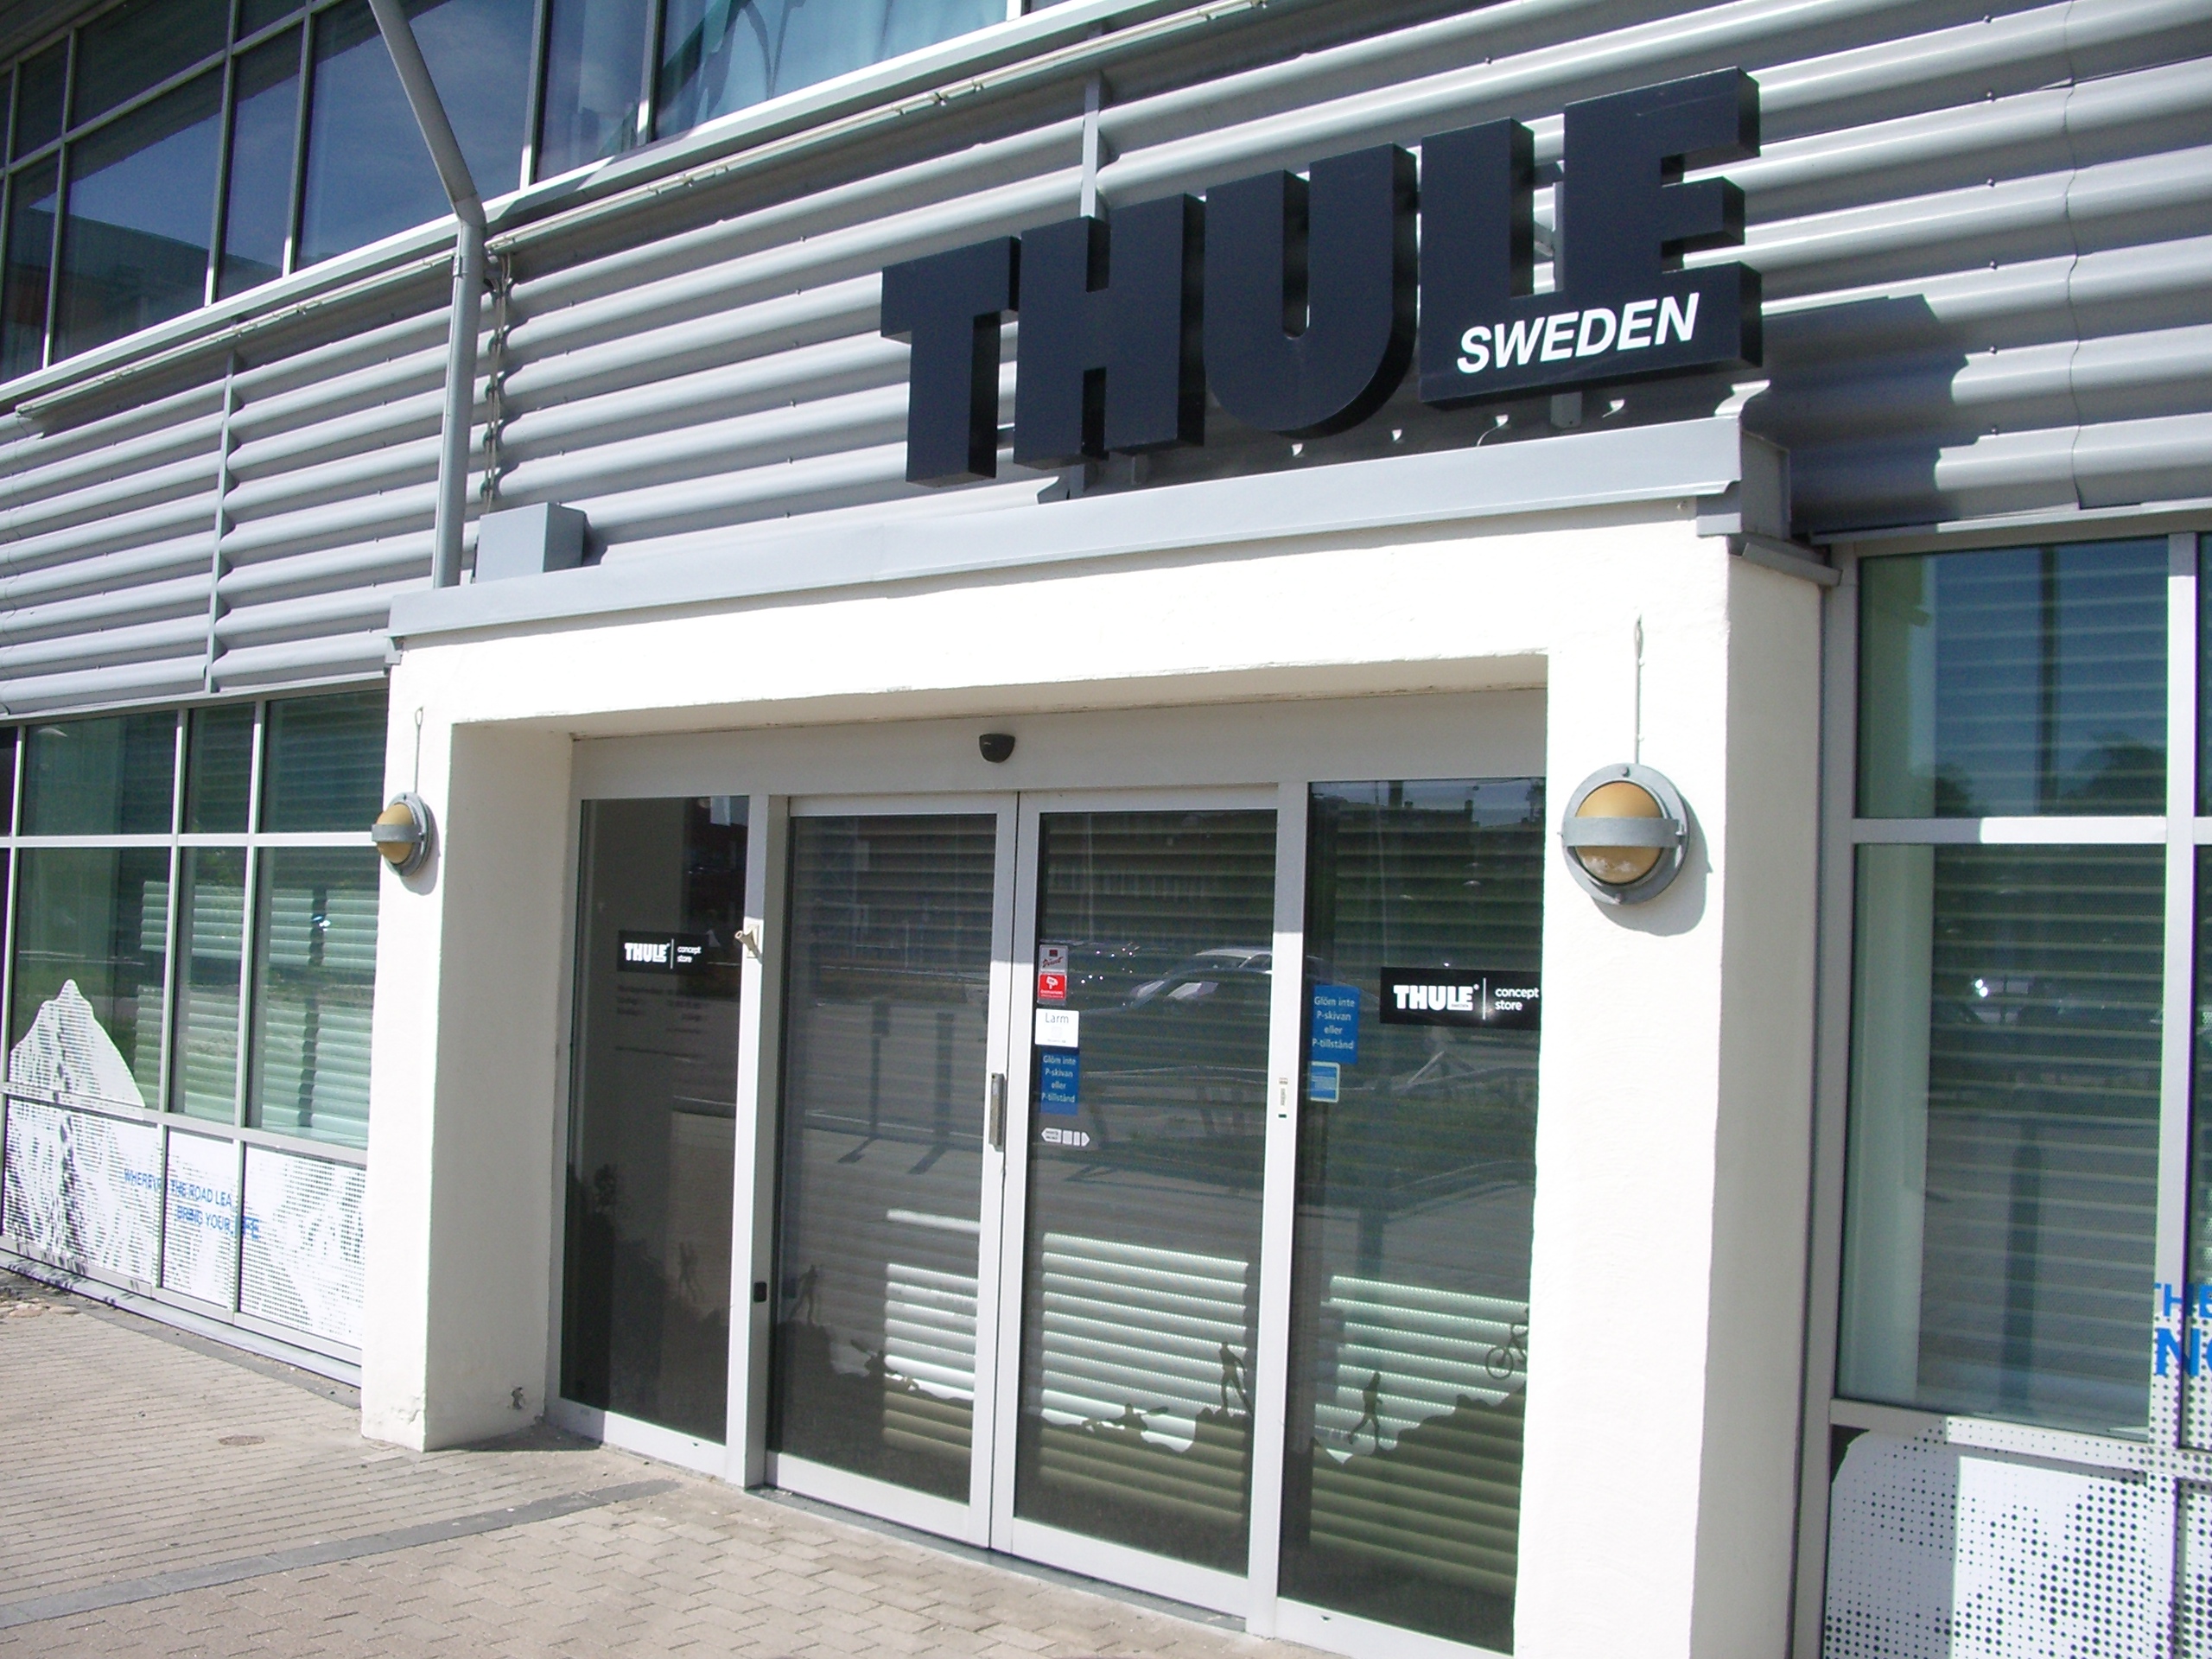 Verfijnen Nauwgezet Het strand File:Thule Concept Store.JPG - Wikipedia